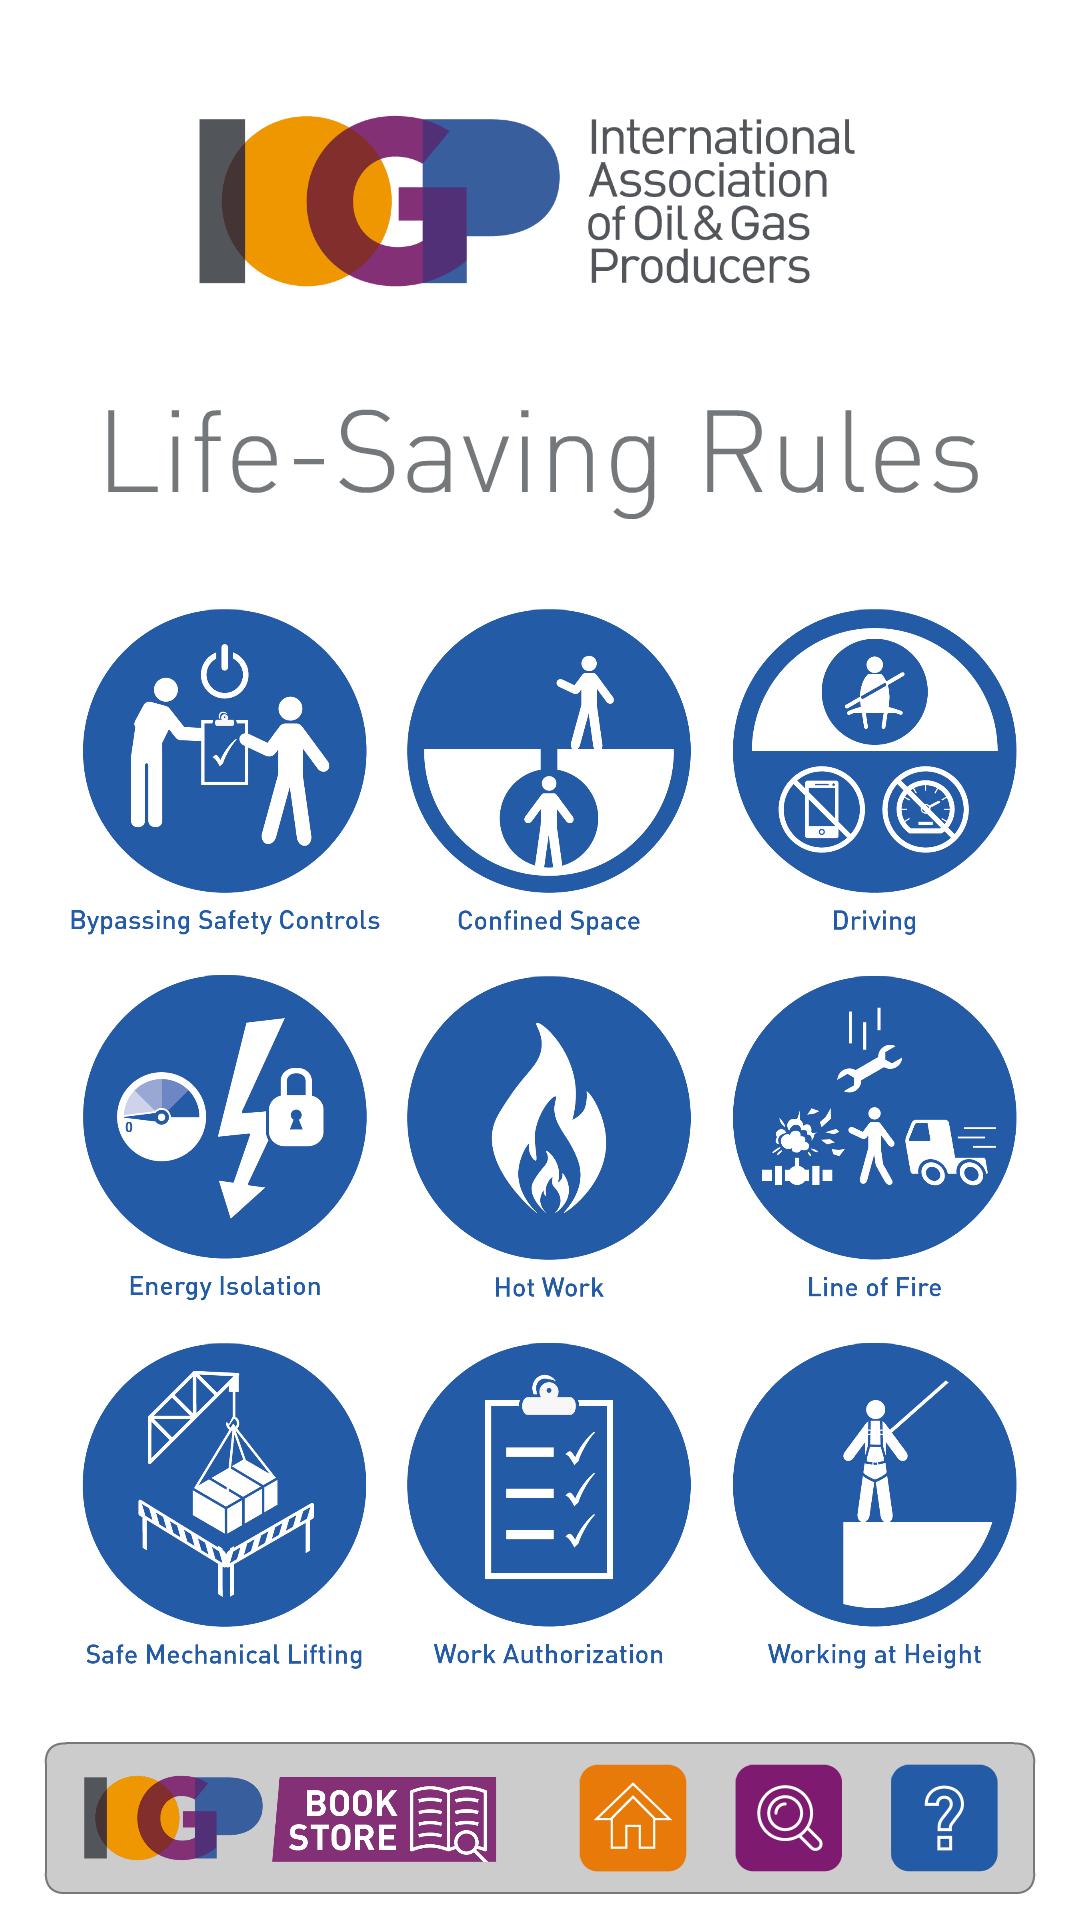 10 Life Saving Rules Poster